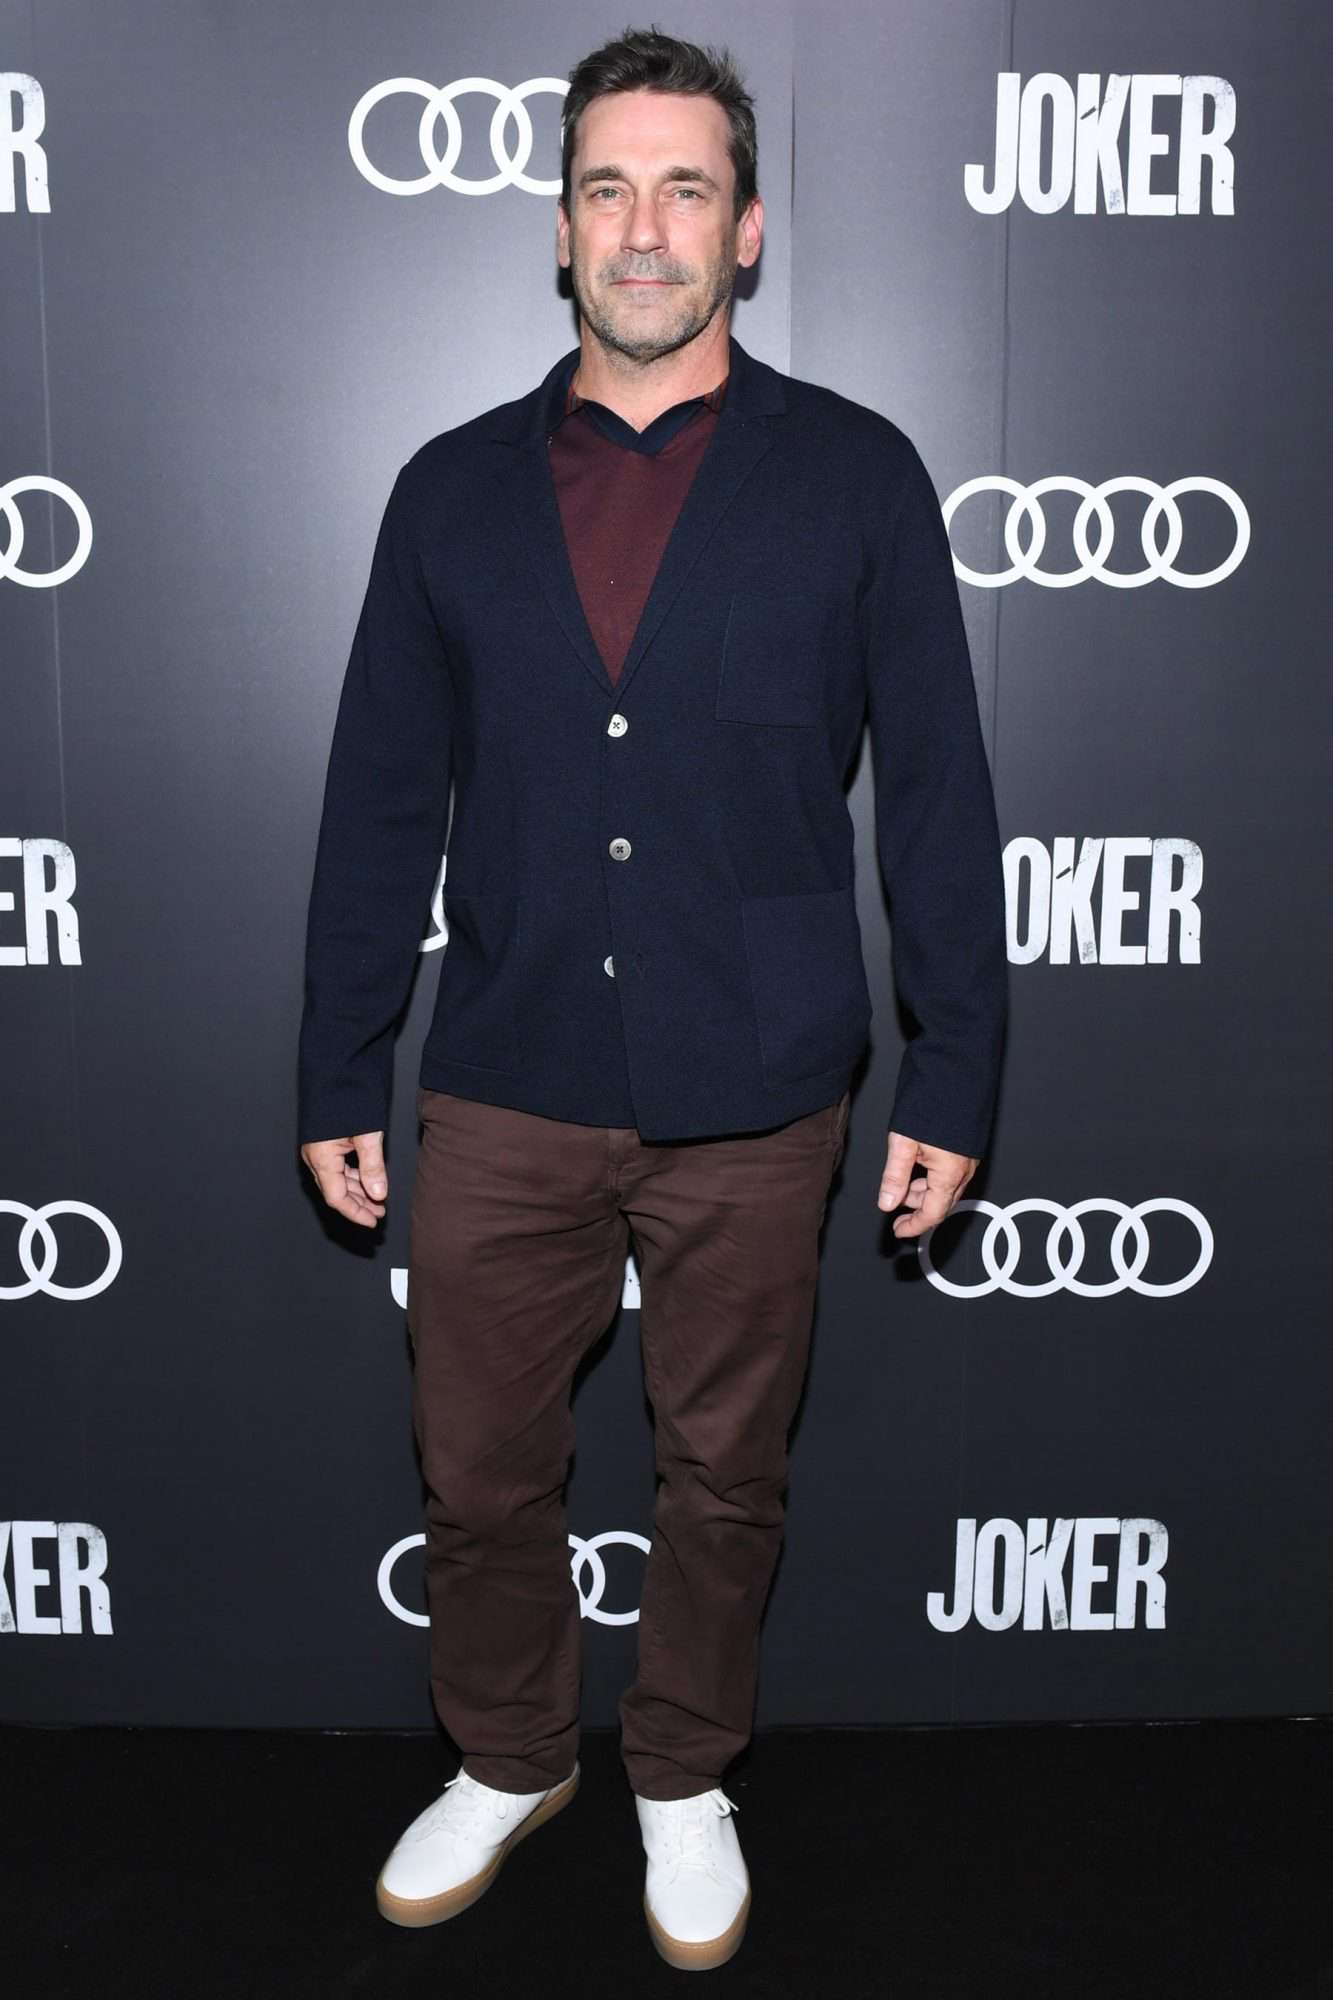 Audi Canada Hosts The Post-Screening Reception For "Joker" During The Toronto International Film Festival